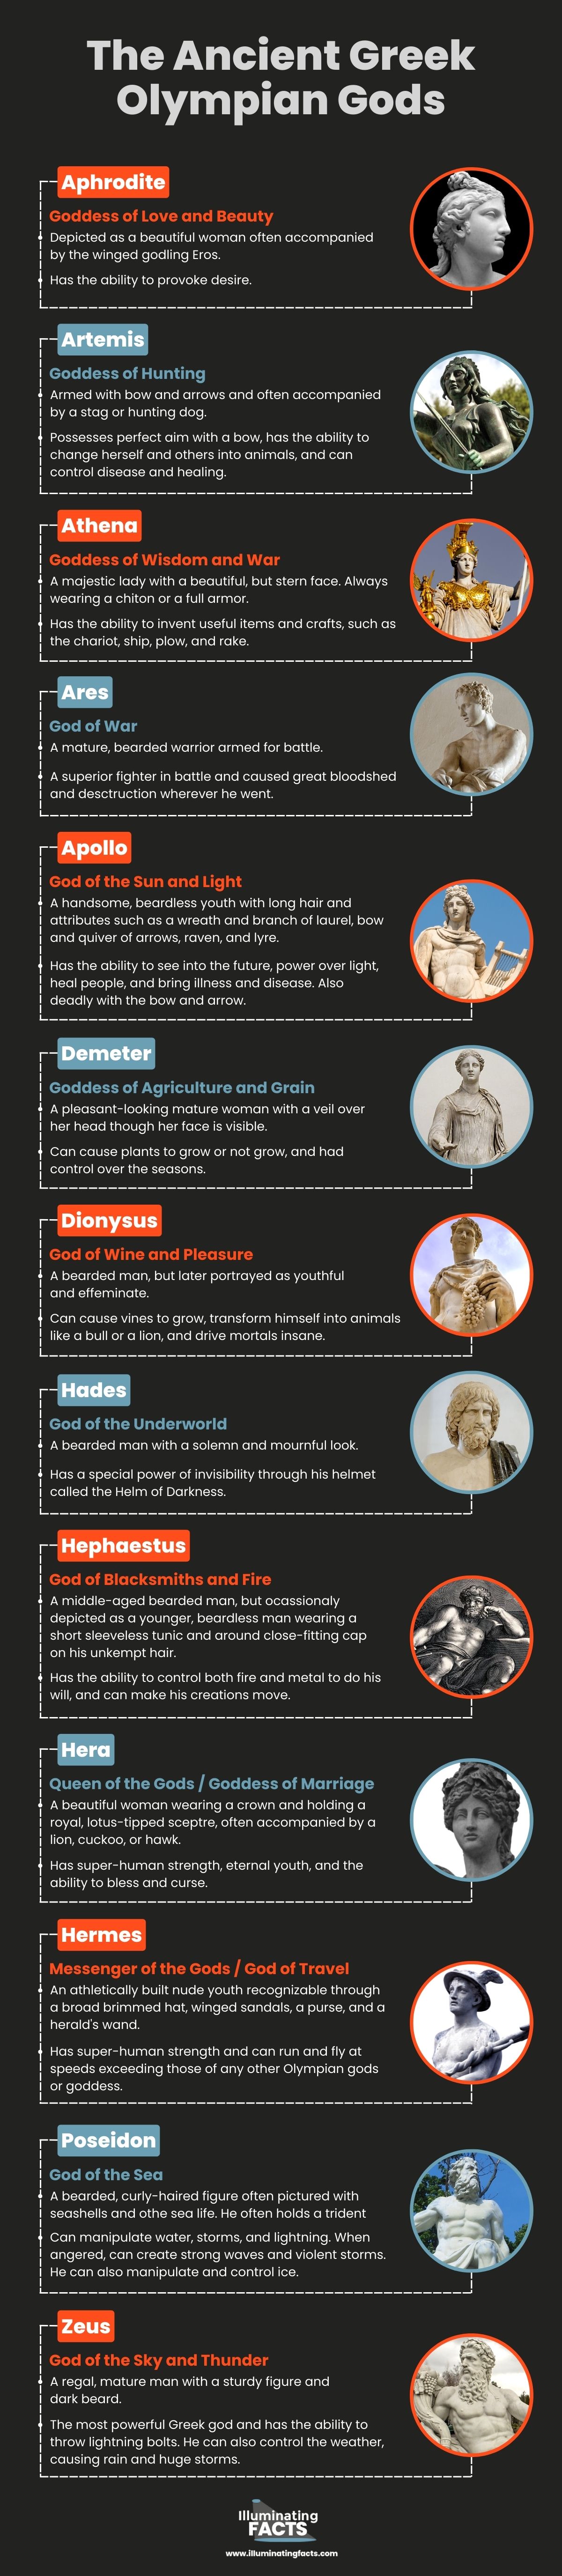 The Ancient Greek Olympian Gods